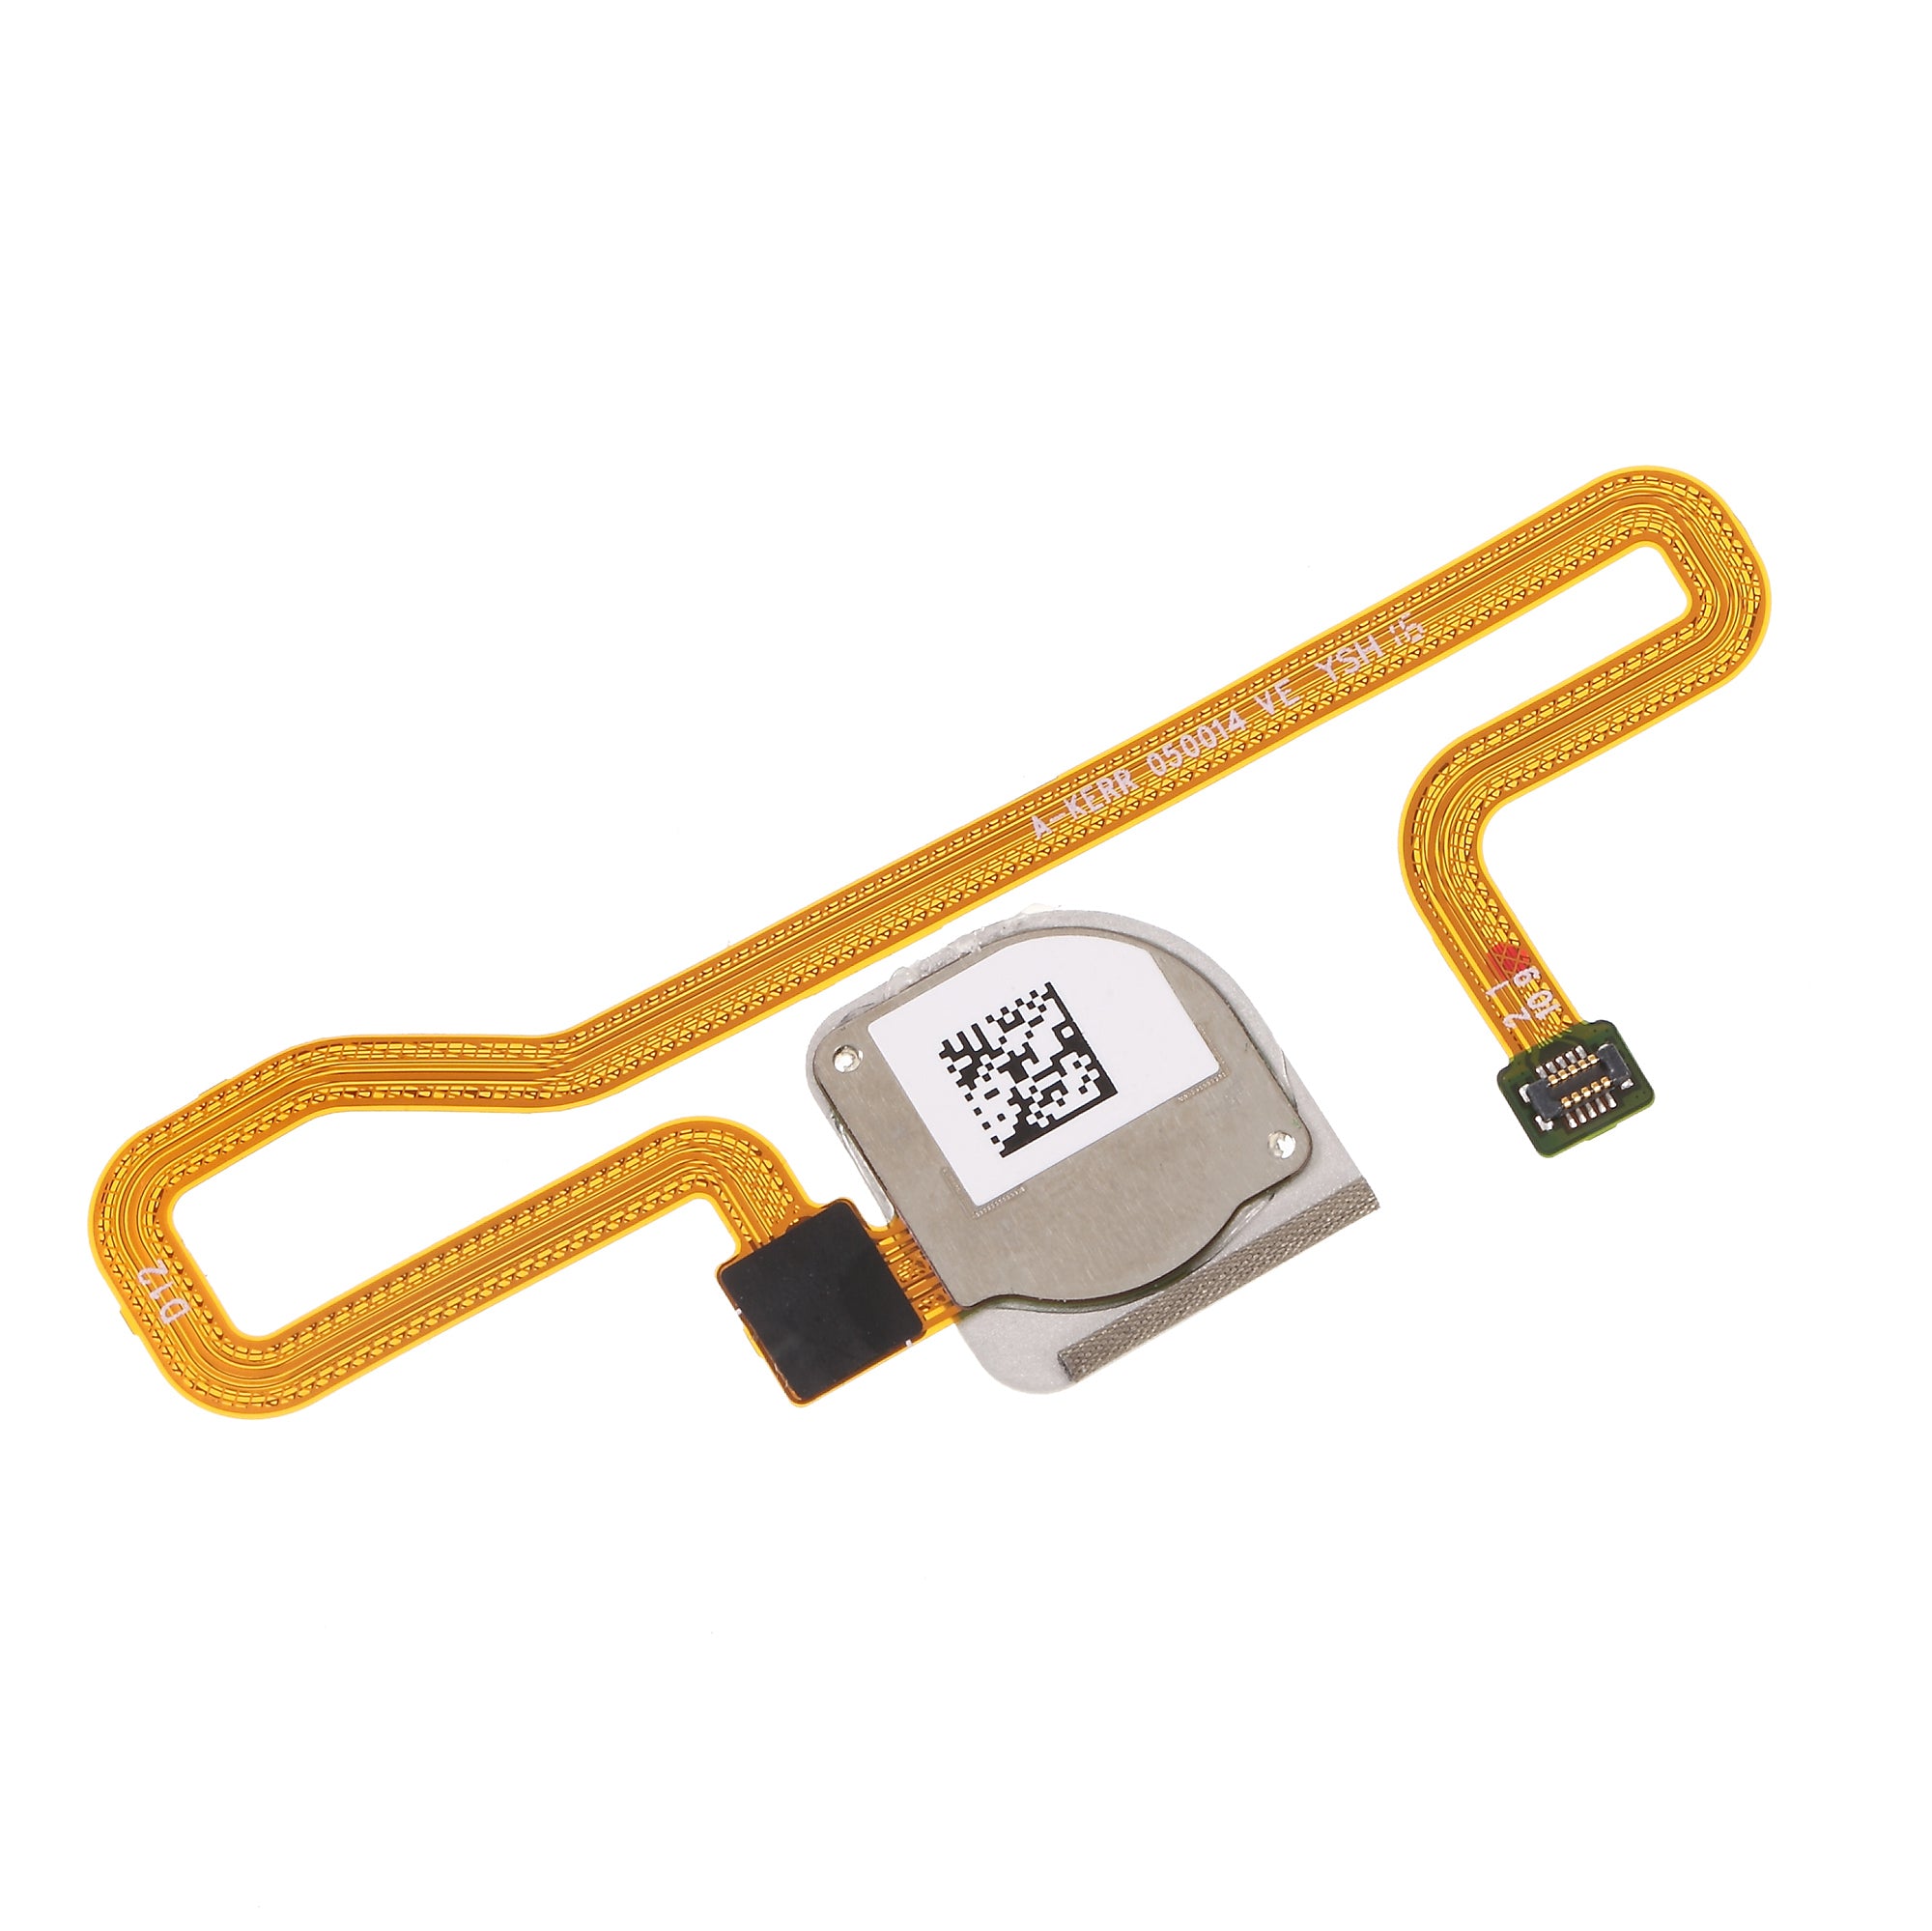 OEM Home Key Fingerprint Button Flex Cable Part Replacement for Huawei Y6 (2018) / Enjoy 8e - Gold